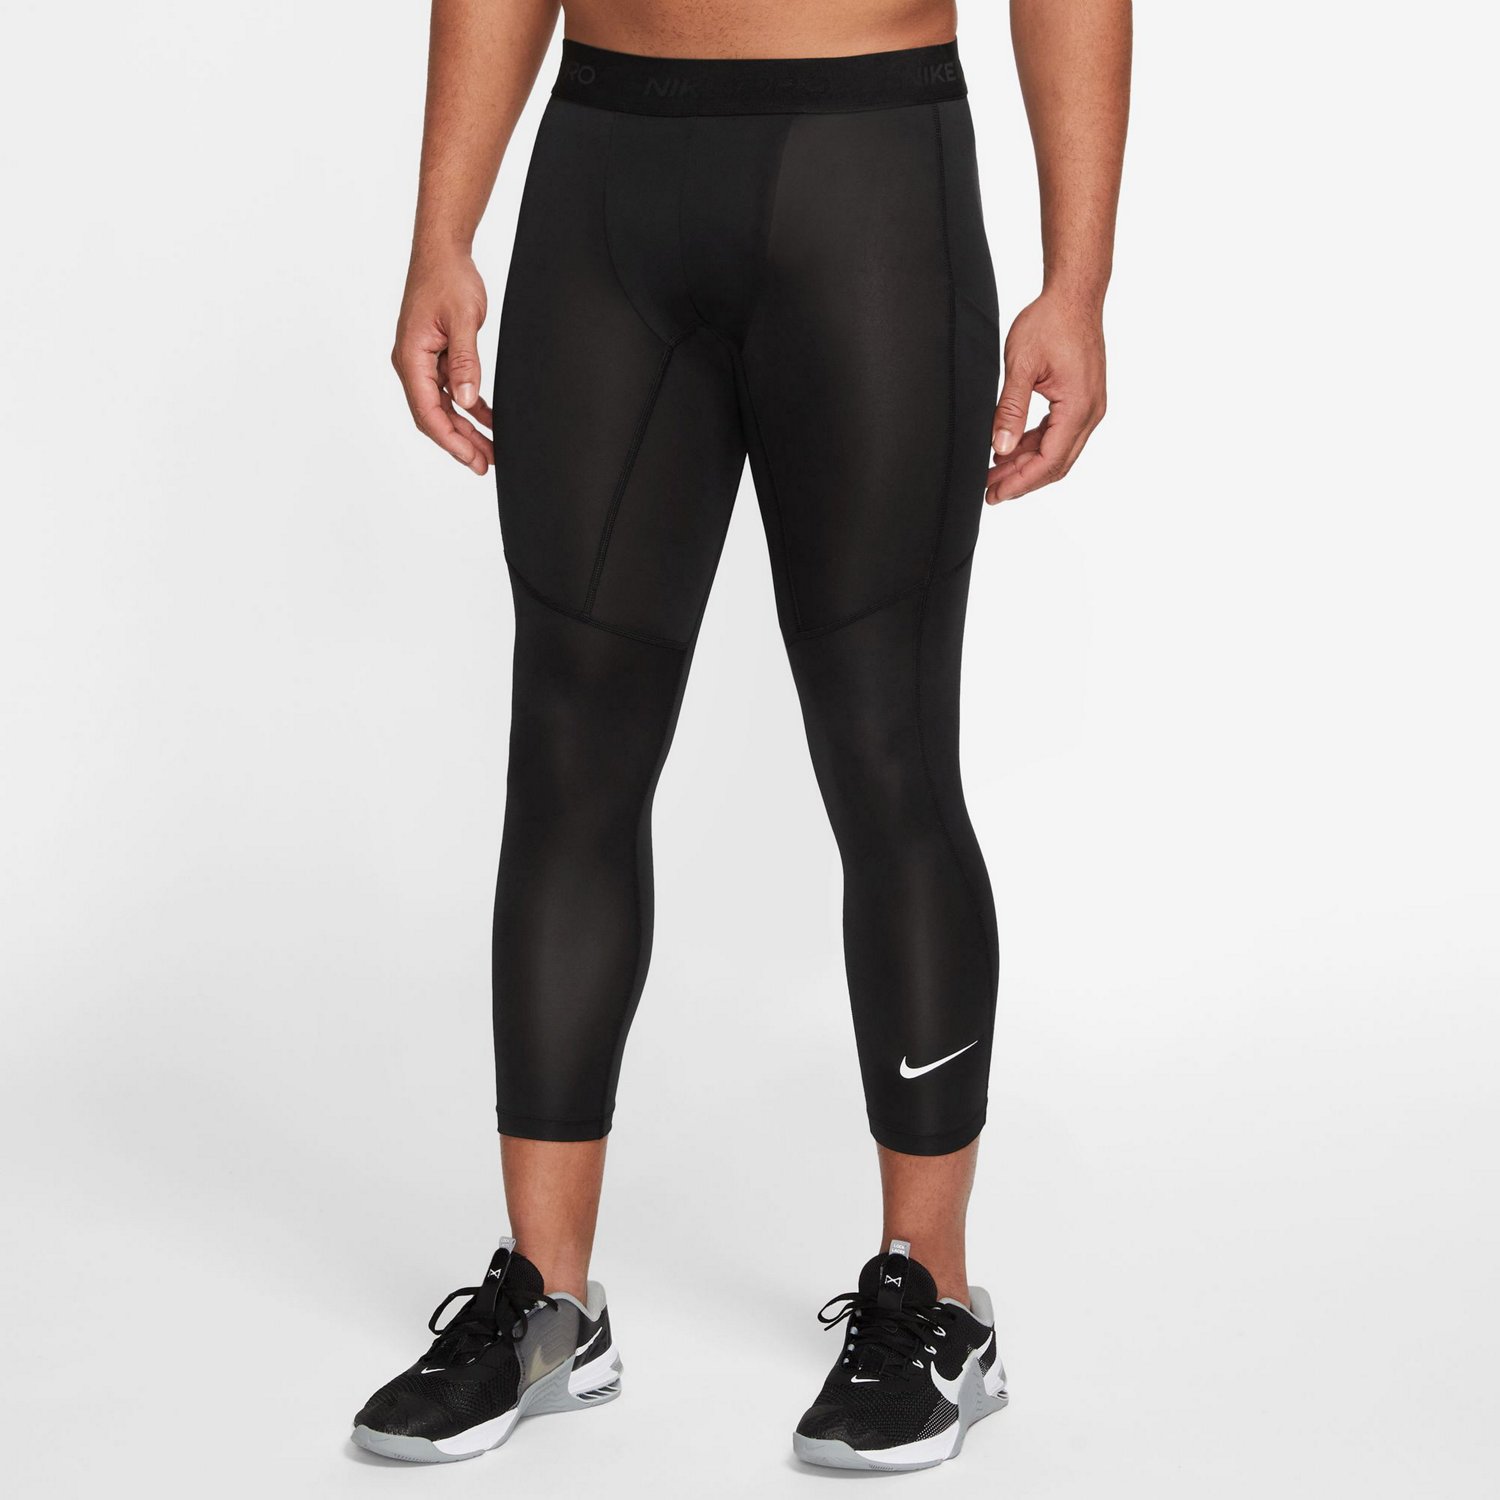 Pants Nike Yoga 